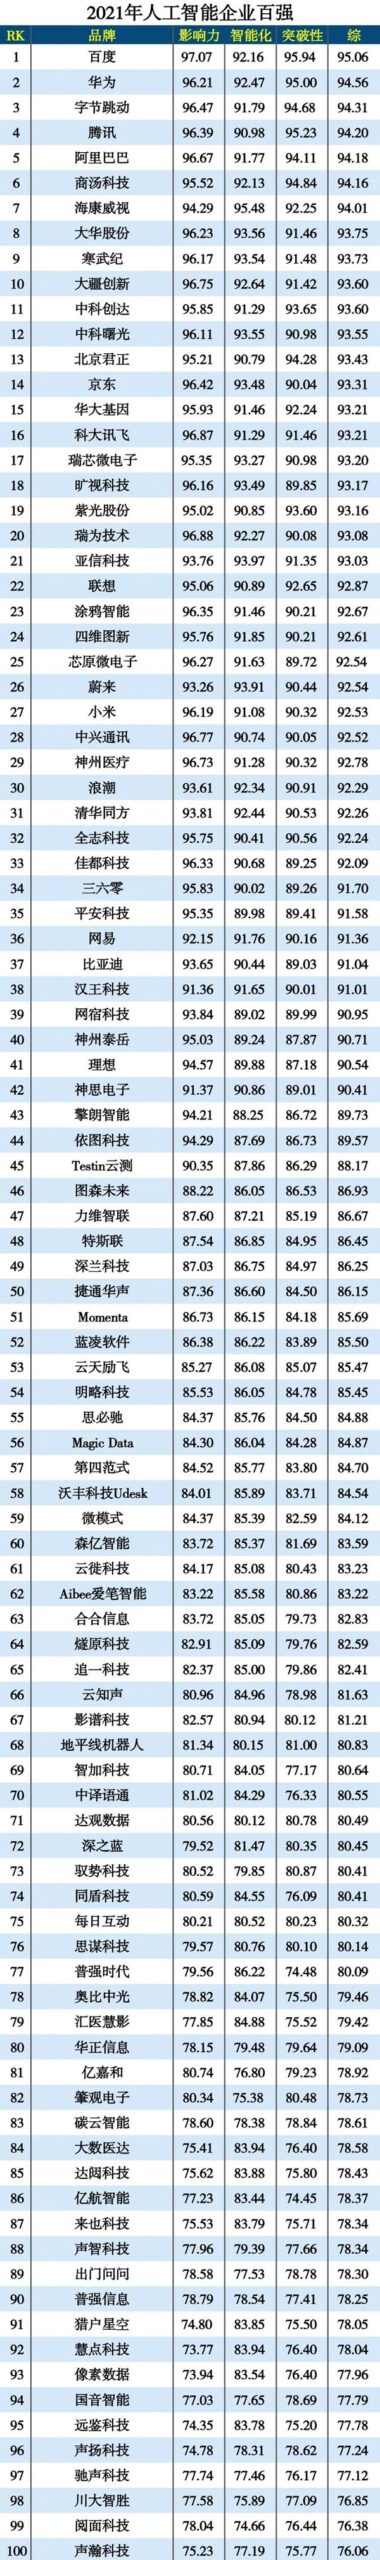 Top 100 AI Companies in China